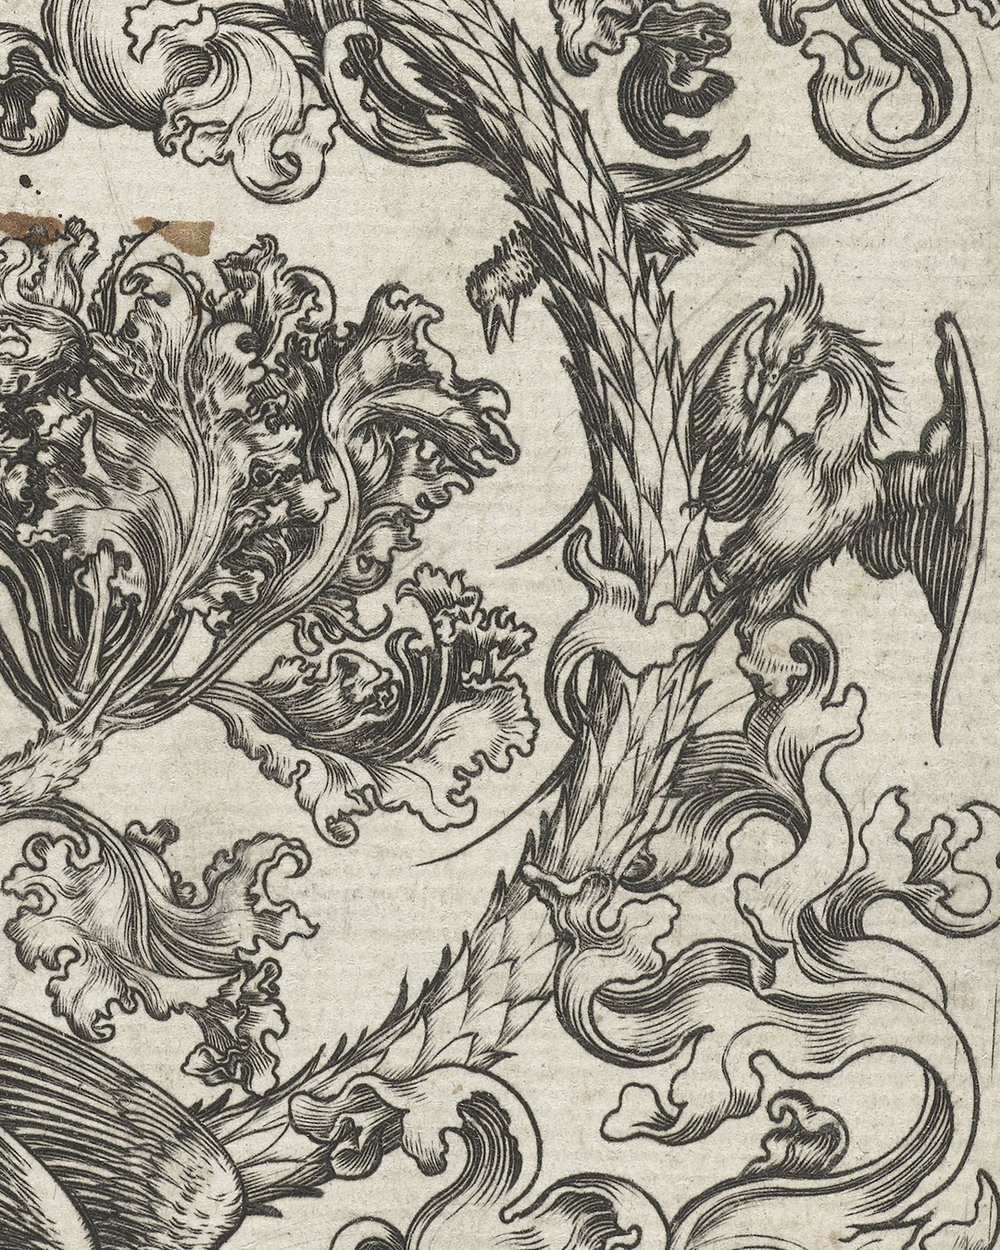 ''Vine ornament with birds'' (1470 - 1490)